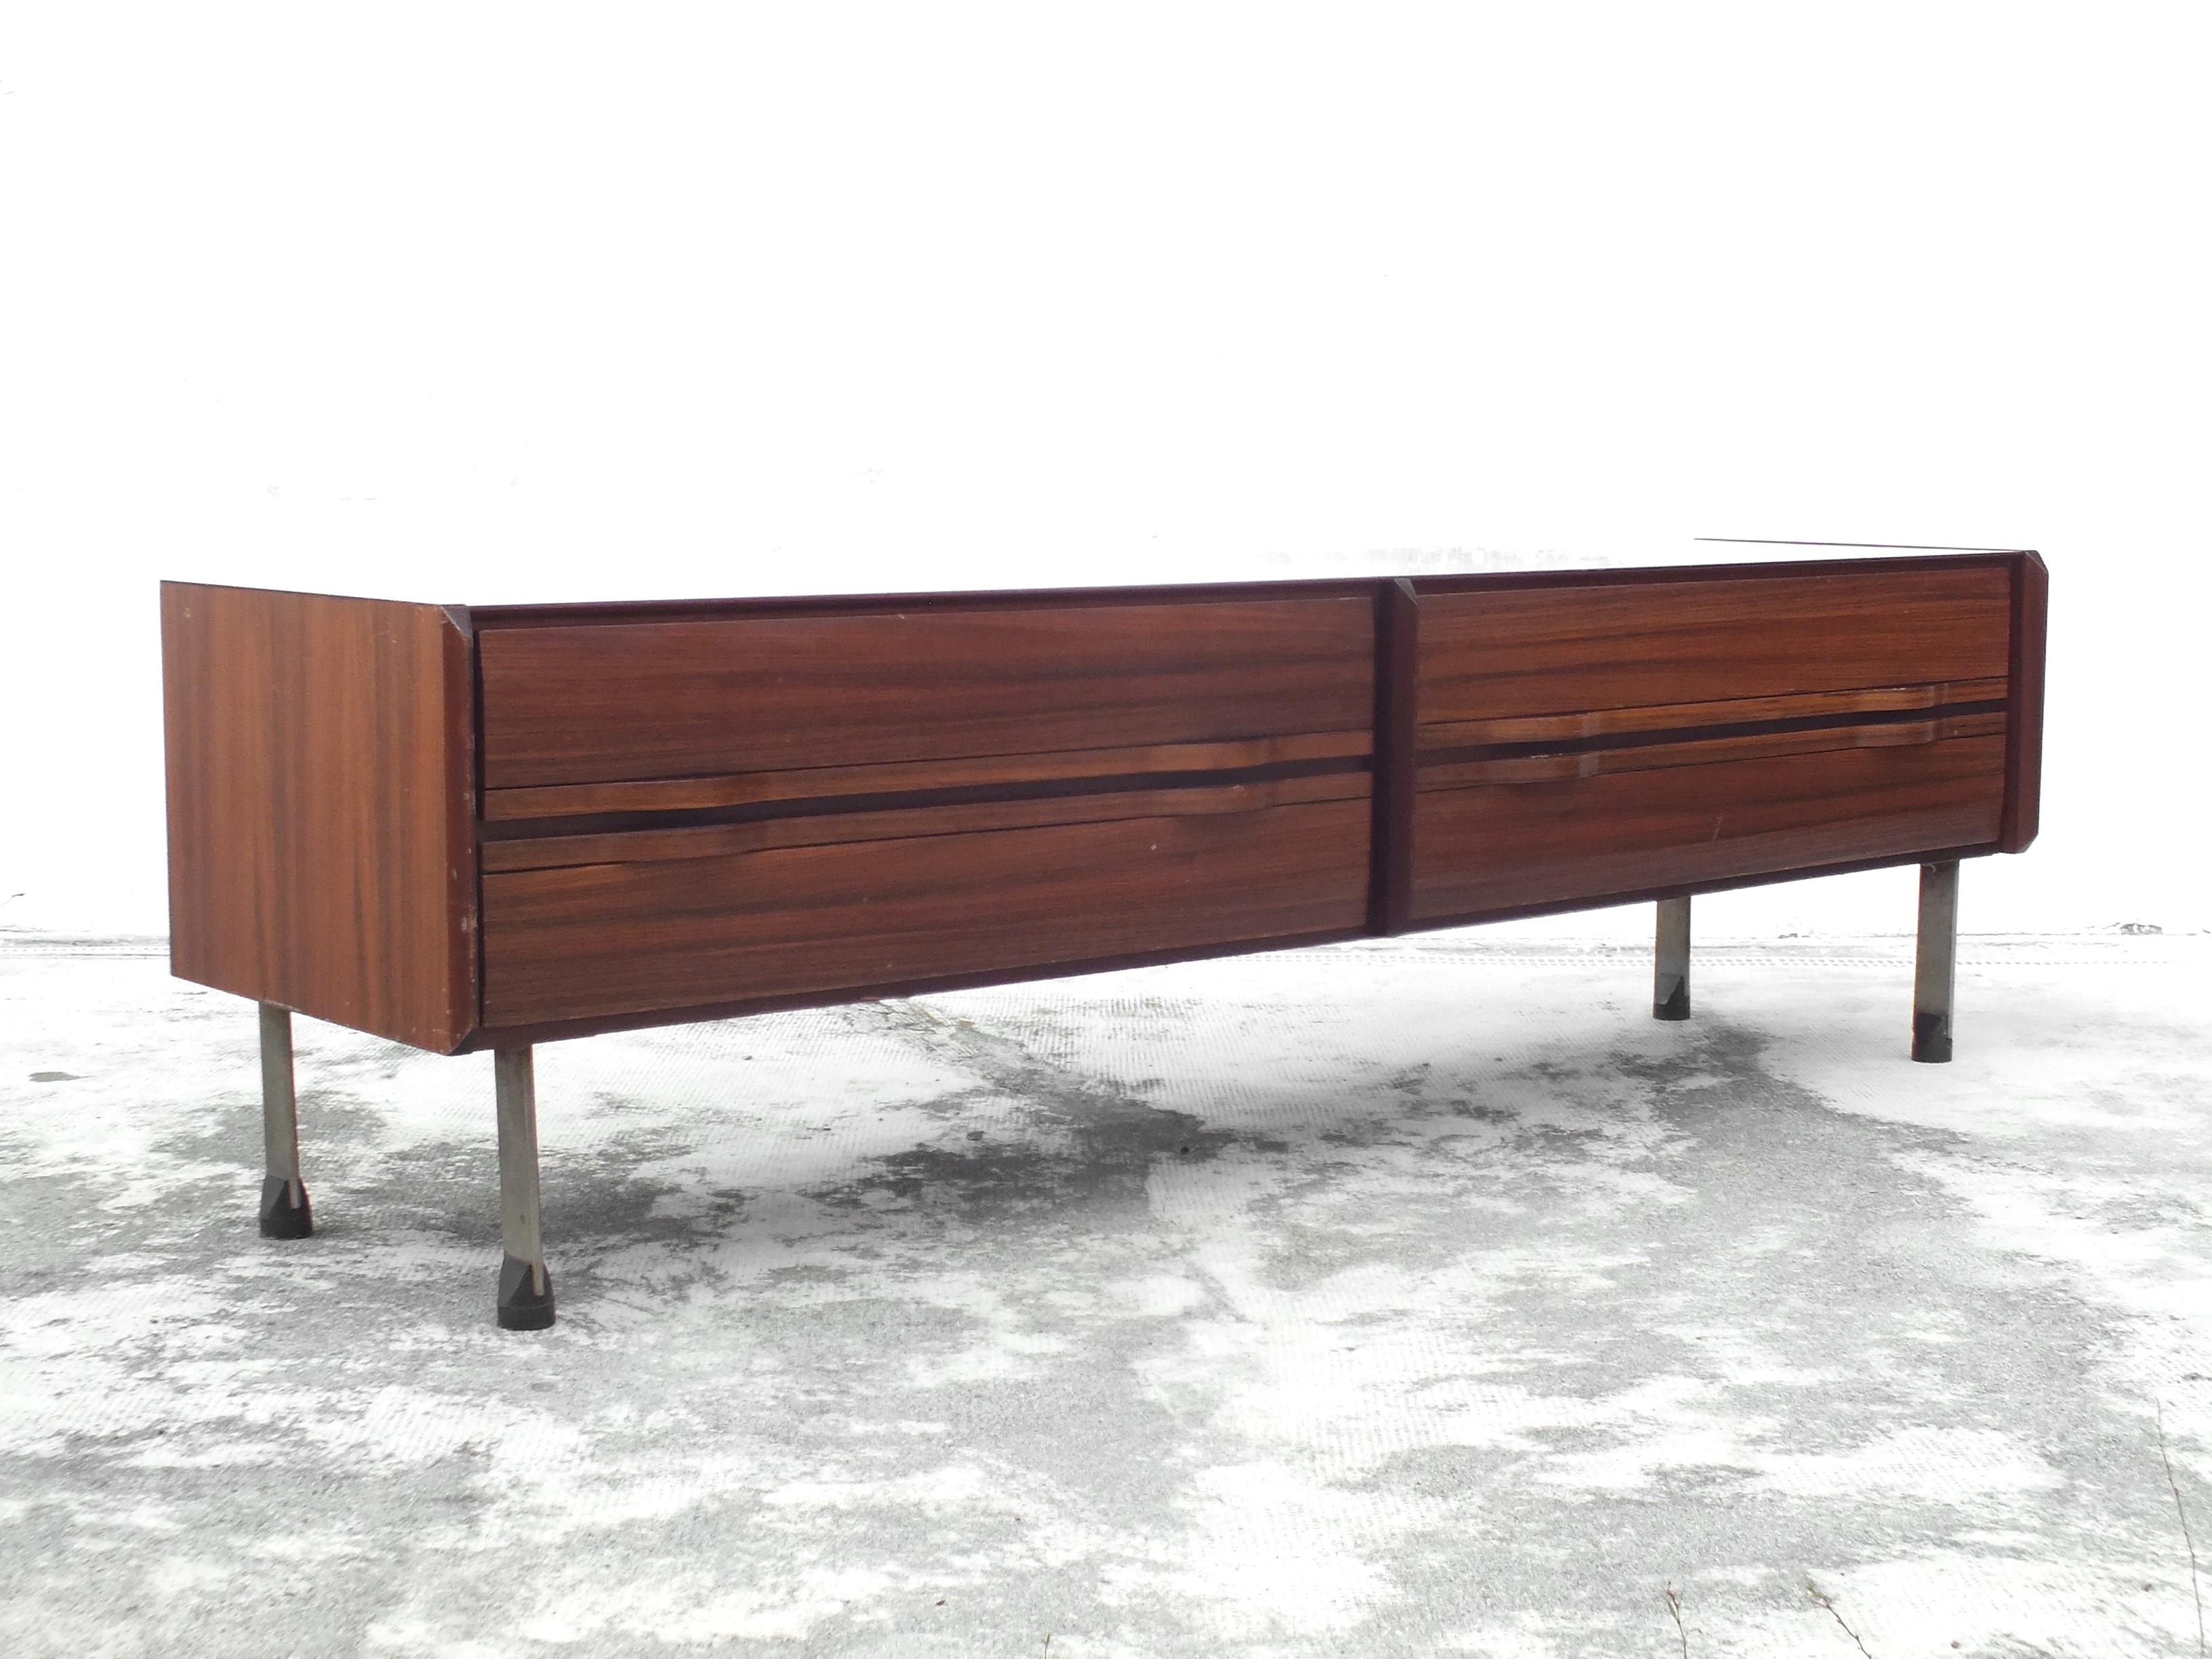 La Permanente meuble Cantu' Italy minimalist sideboard probable Frattini design  For Sale 11